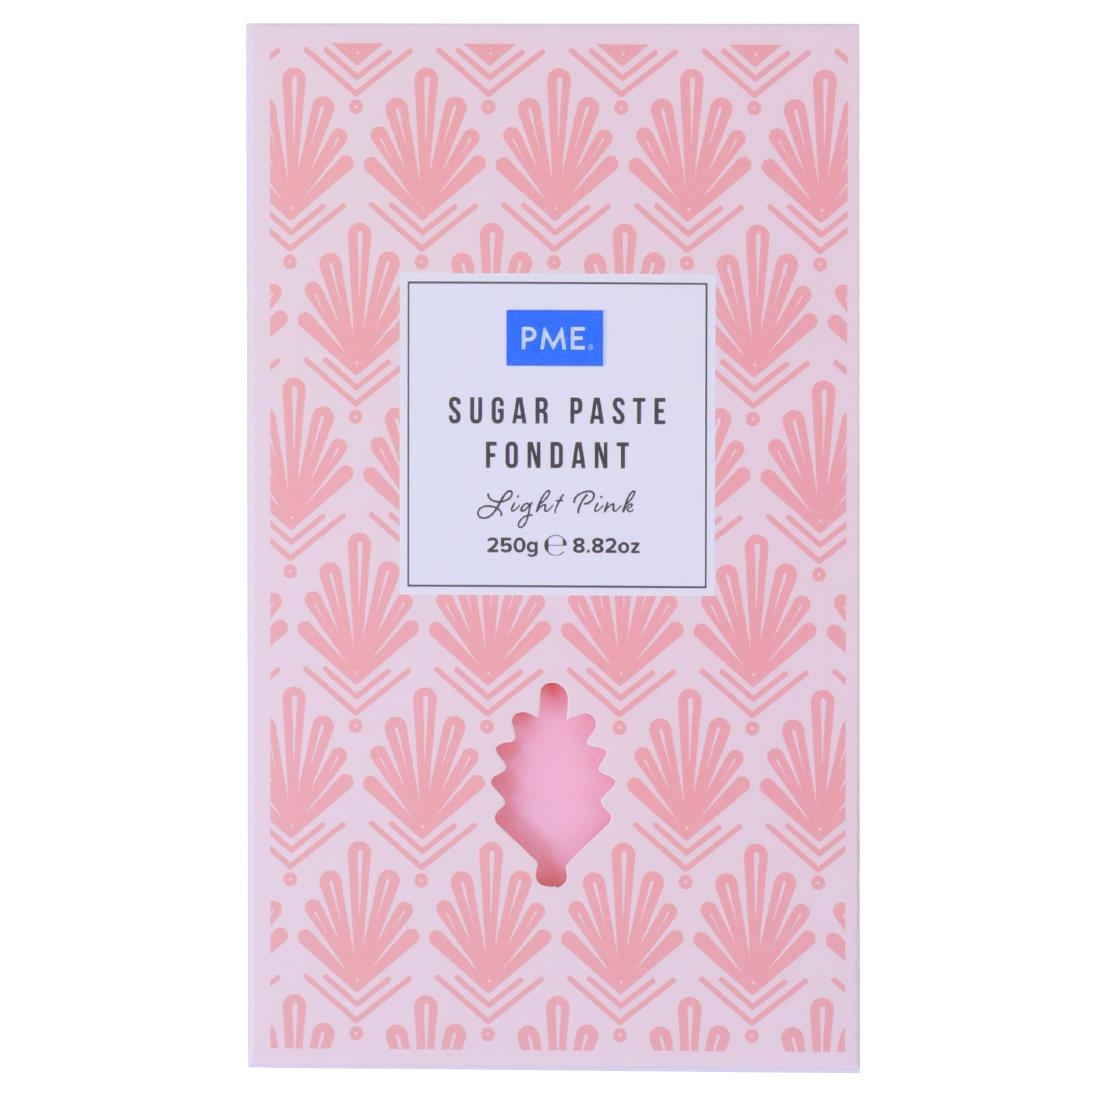 PME Sugar Paste Fondant Light Pink 250g (HU301)